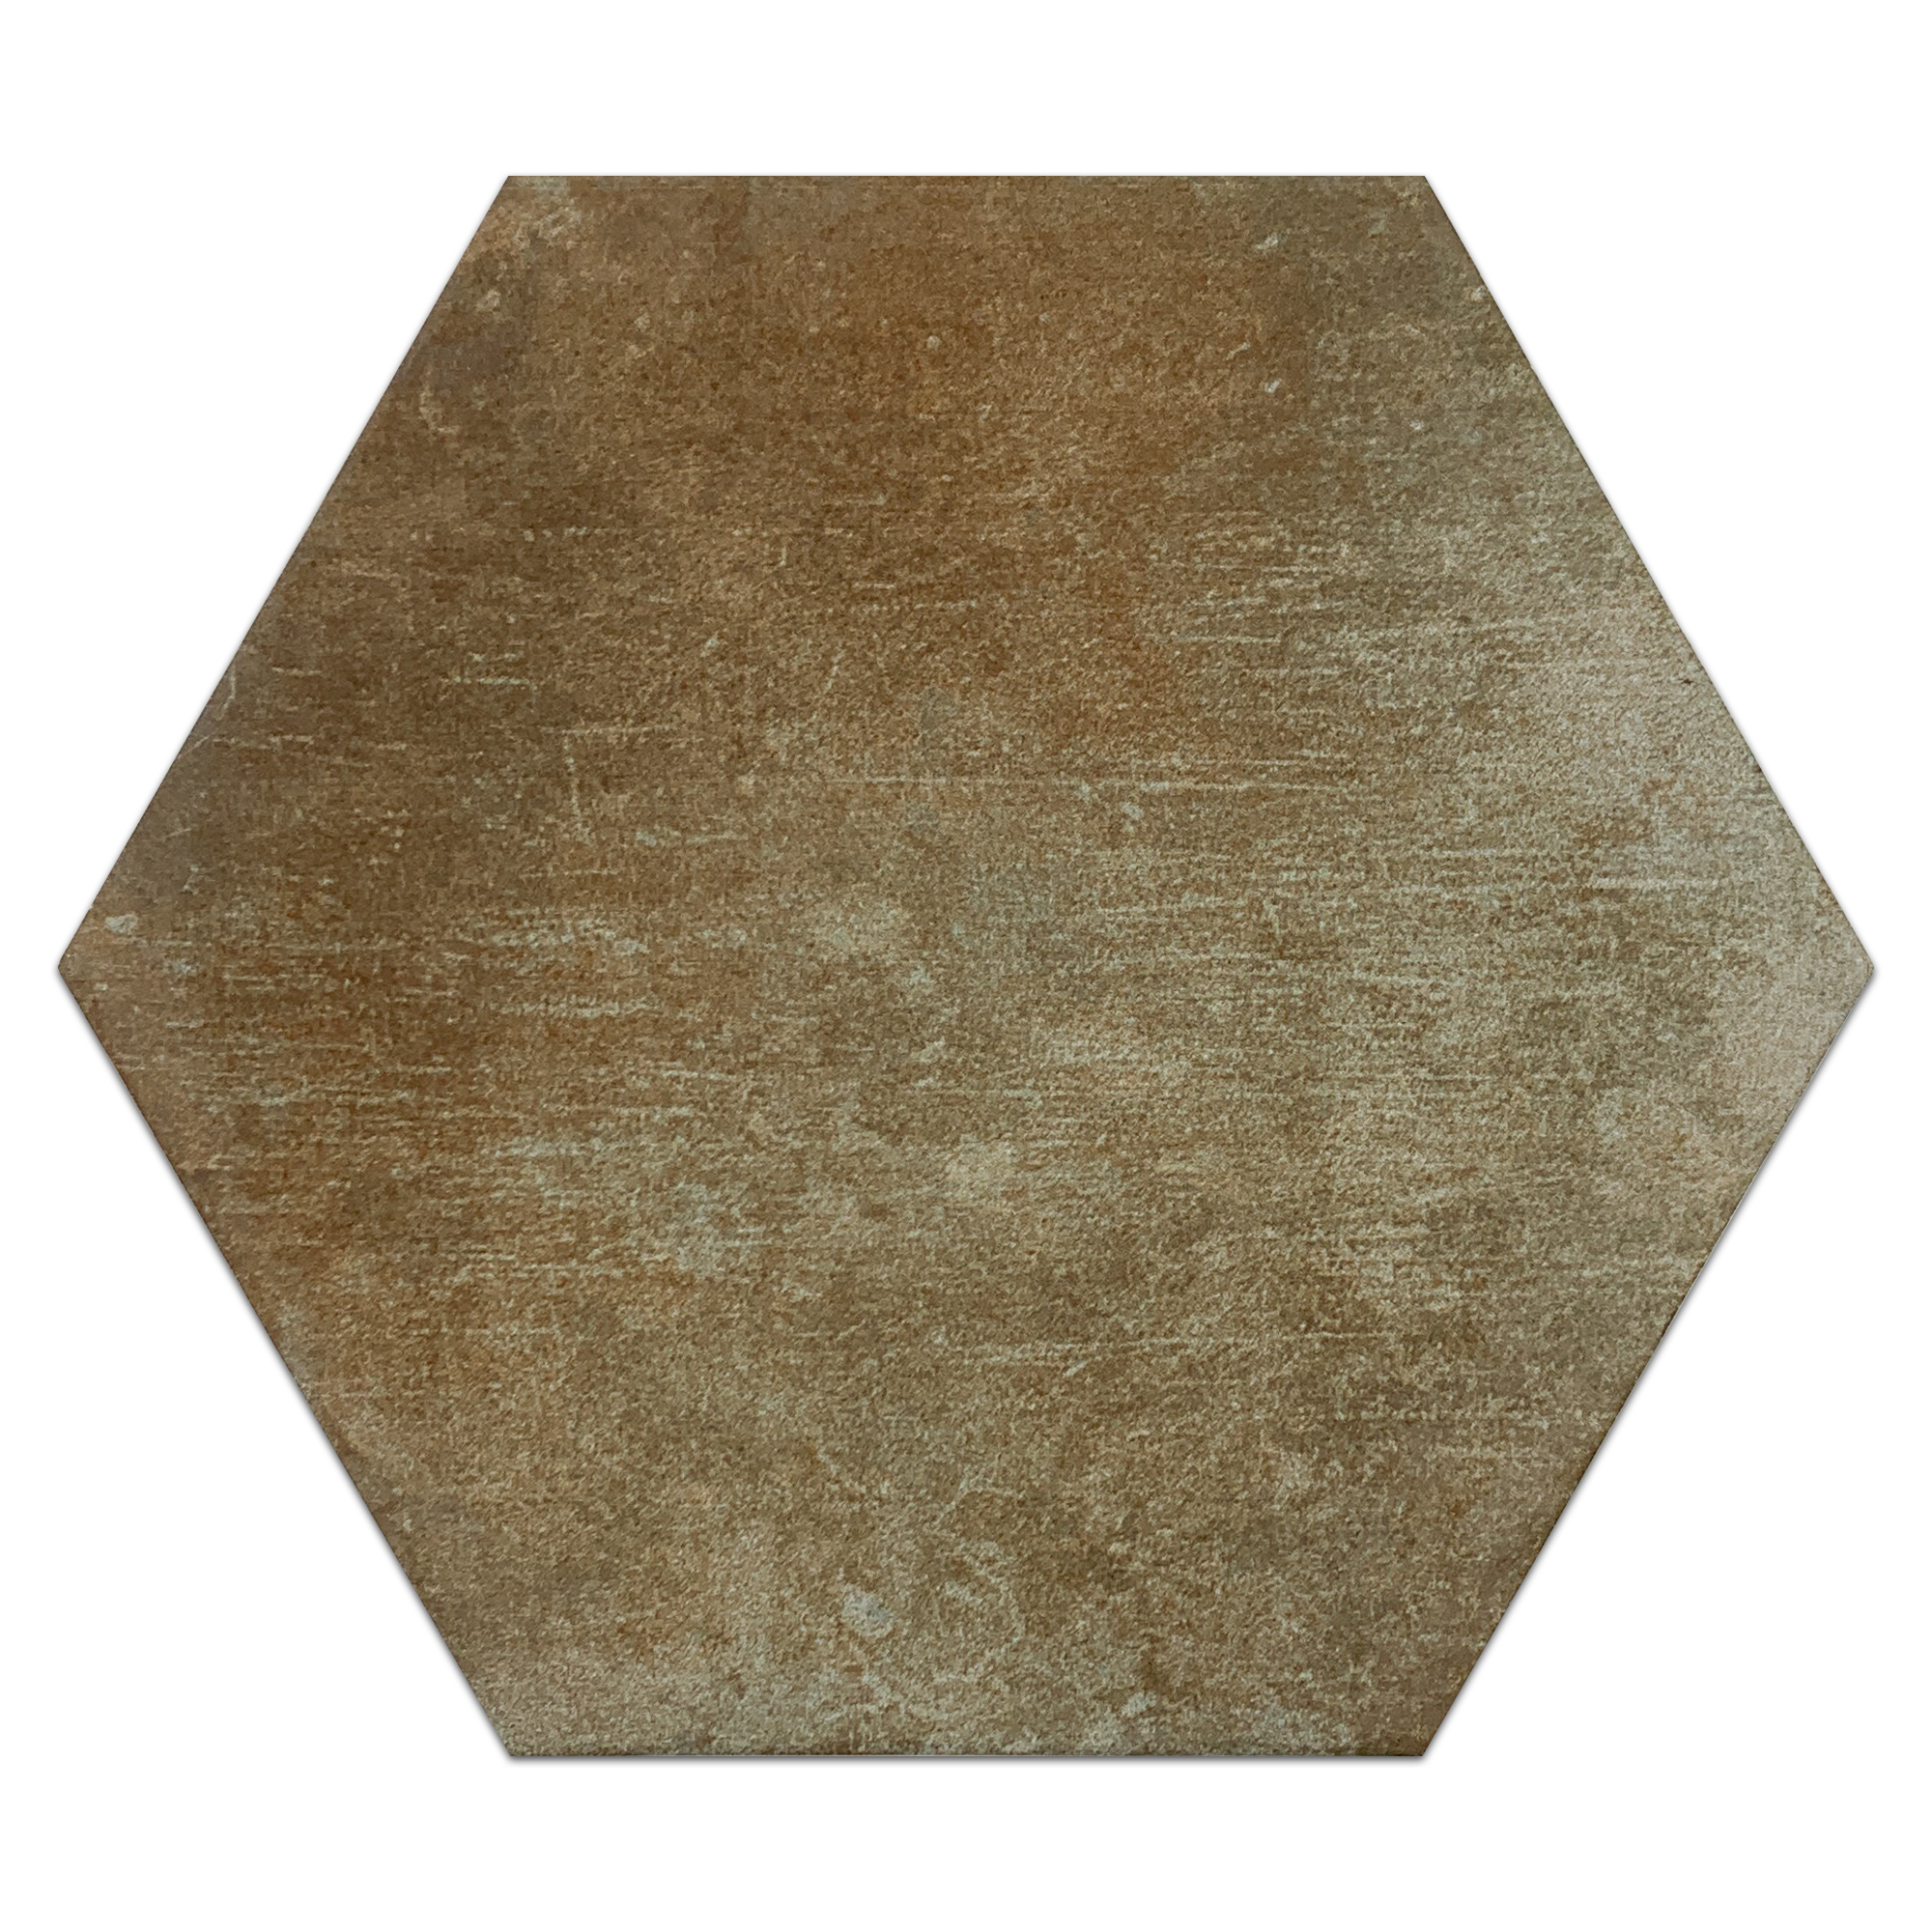 Elon Boston Brick West Porcelain Hexagon Field Tile 11.2x12.7x0.375 Natural Pressed BC106 Surface Group International Product